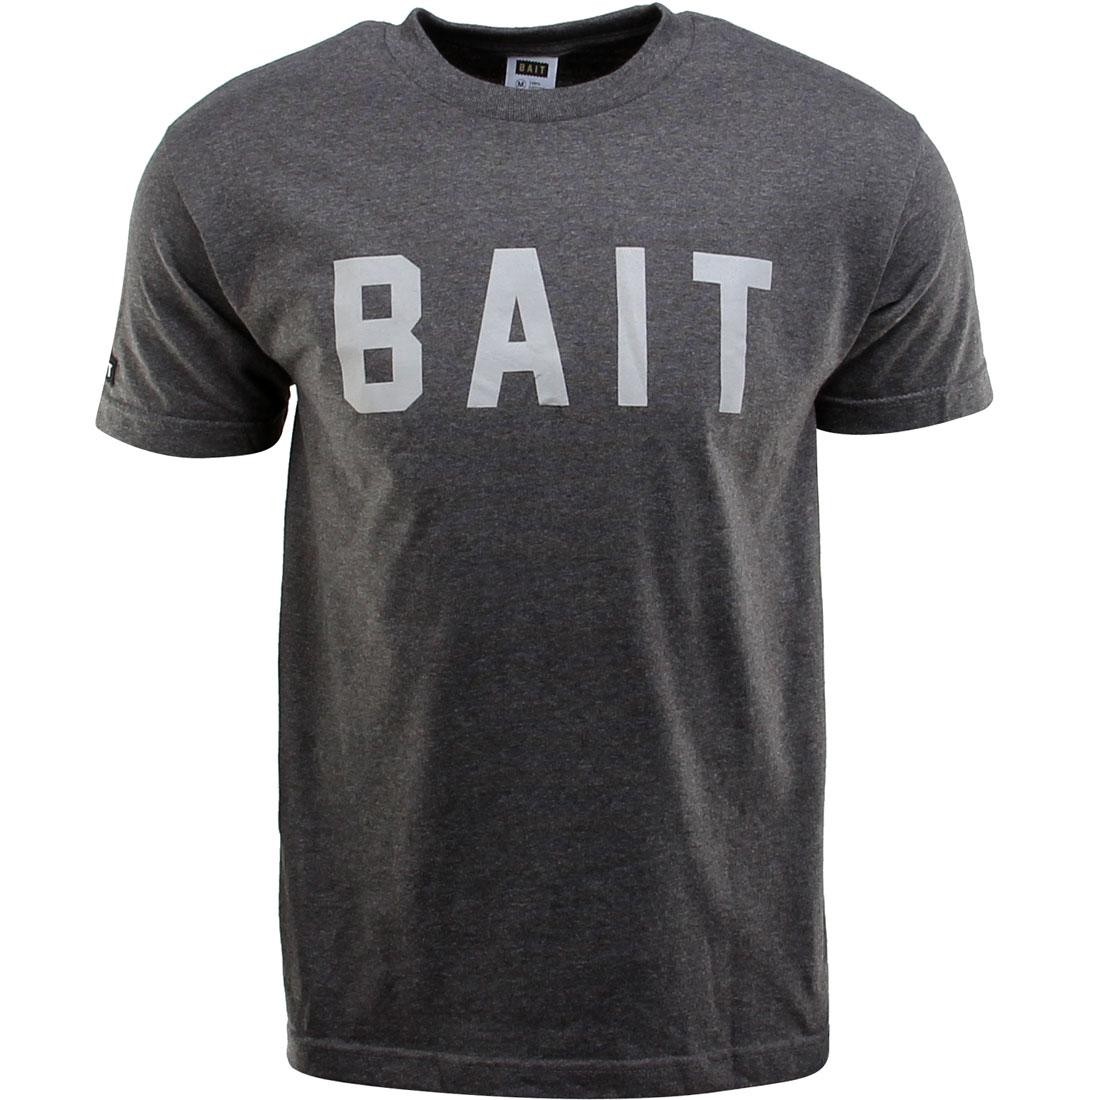 BAIT Logo Tee (gray / charcoal heather / gray)